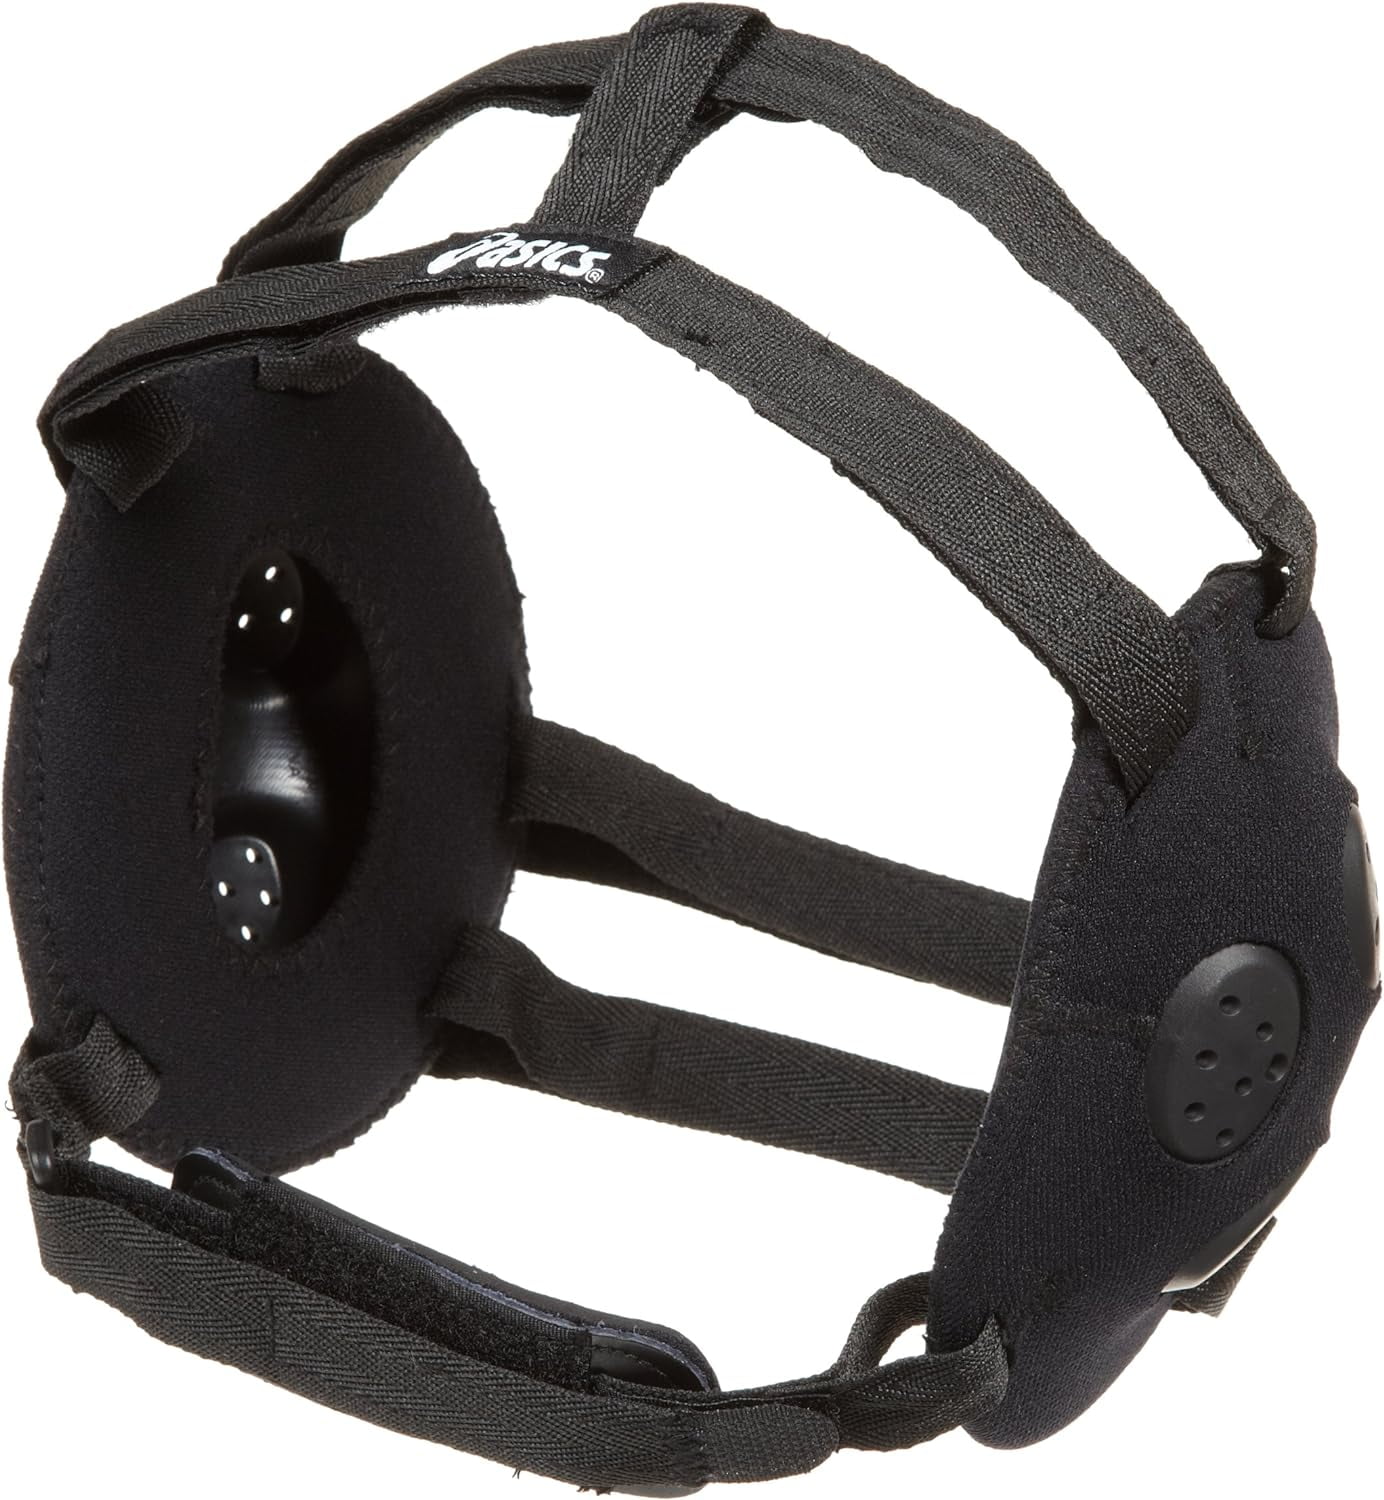 ASICS Gel Headgear, Black, One Size - Walmart.com